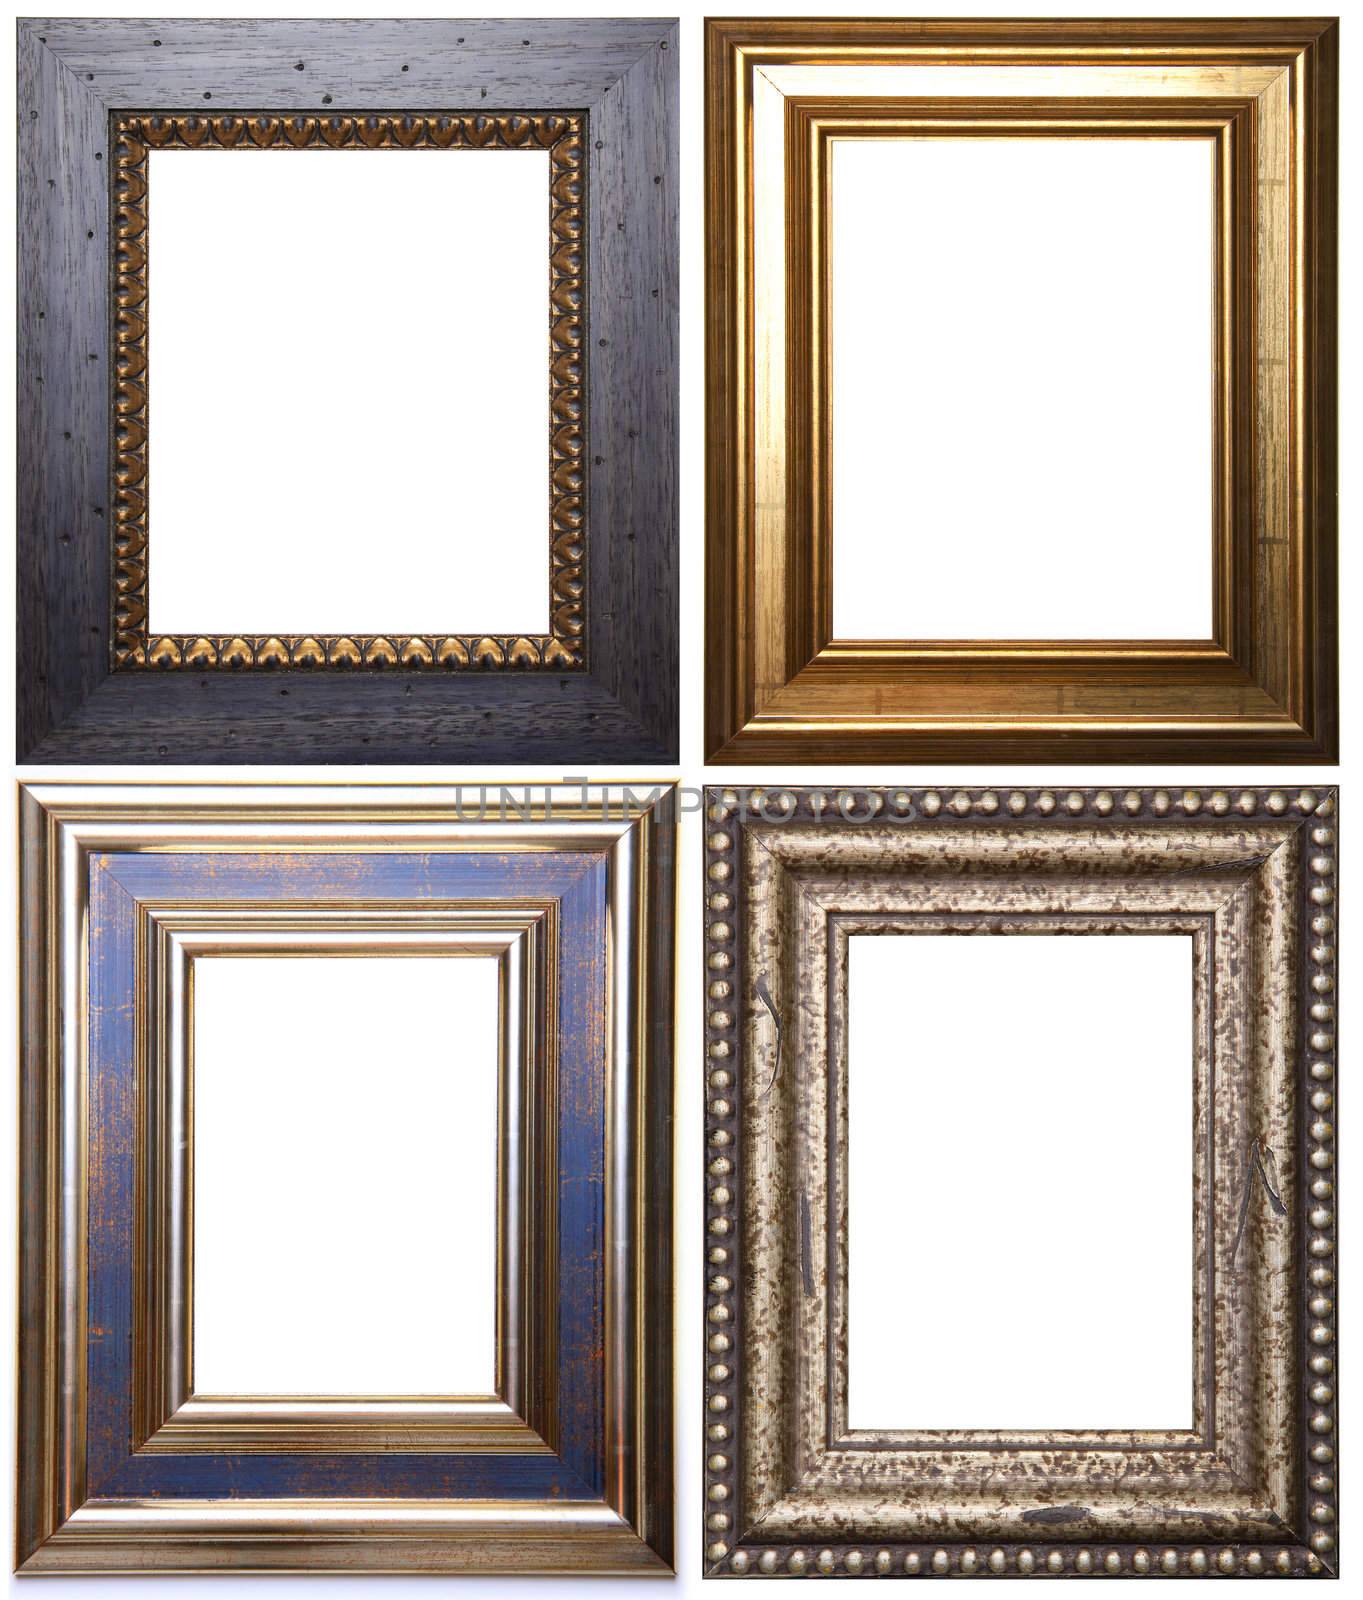 Group of frames on white